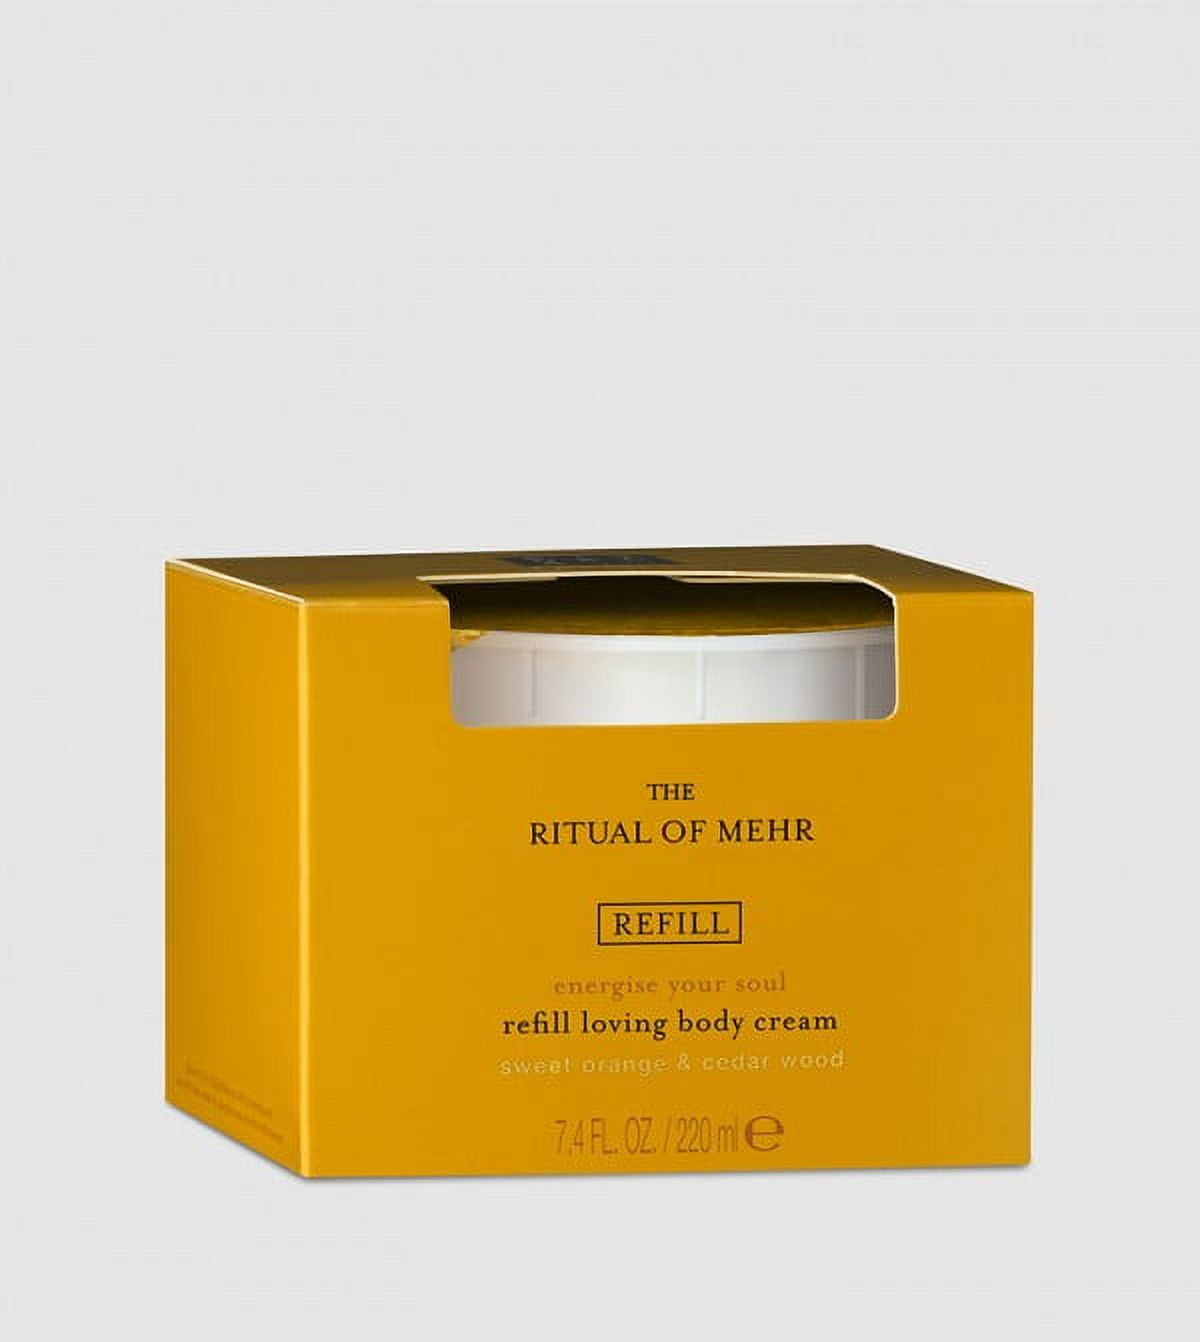 Rituals - The Ritual of Mehr body cream refill (220ml)